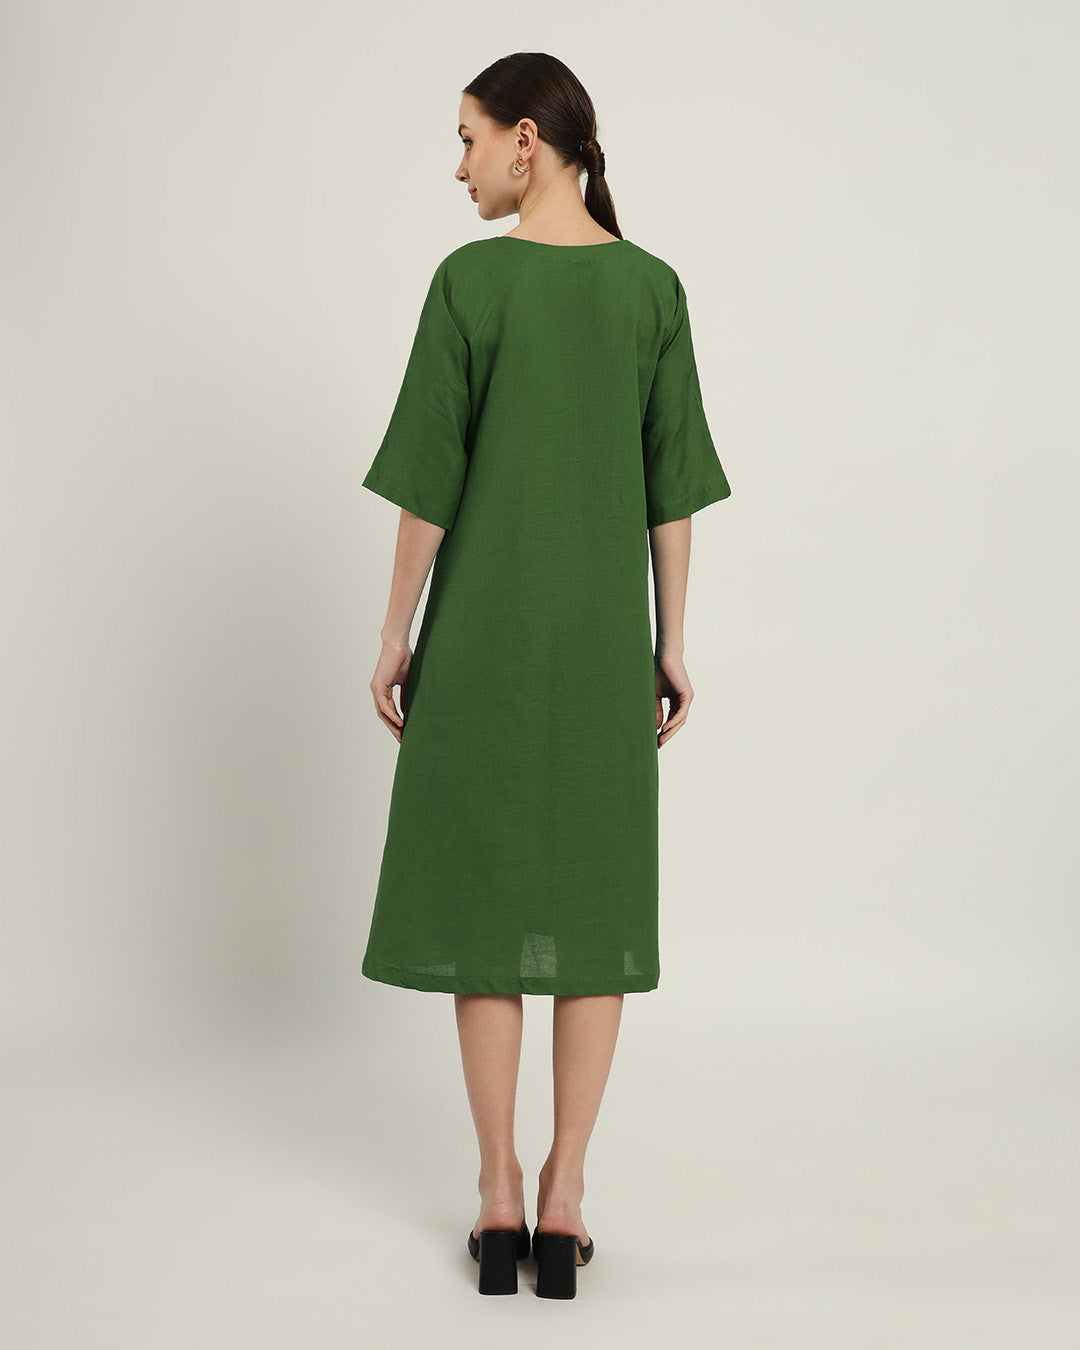 The Mildura Emerald Dress